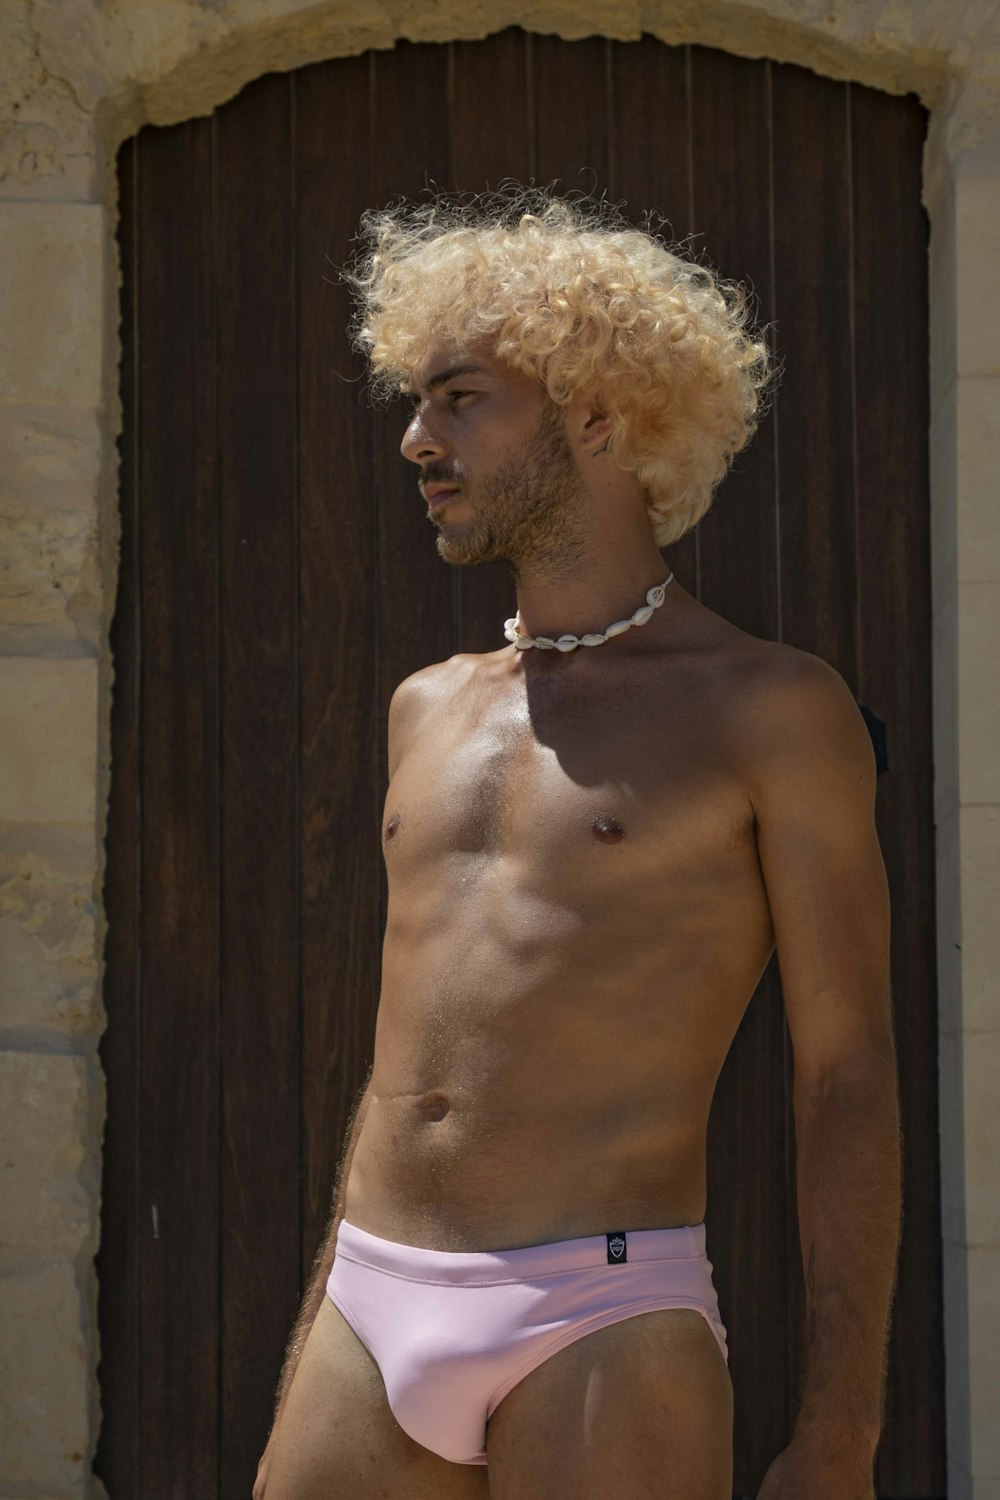 a man with blonde hair wearing a pink underwear